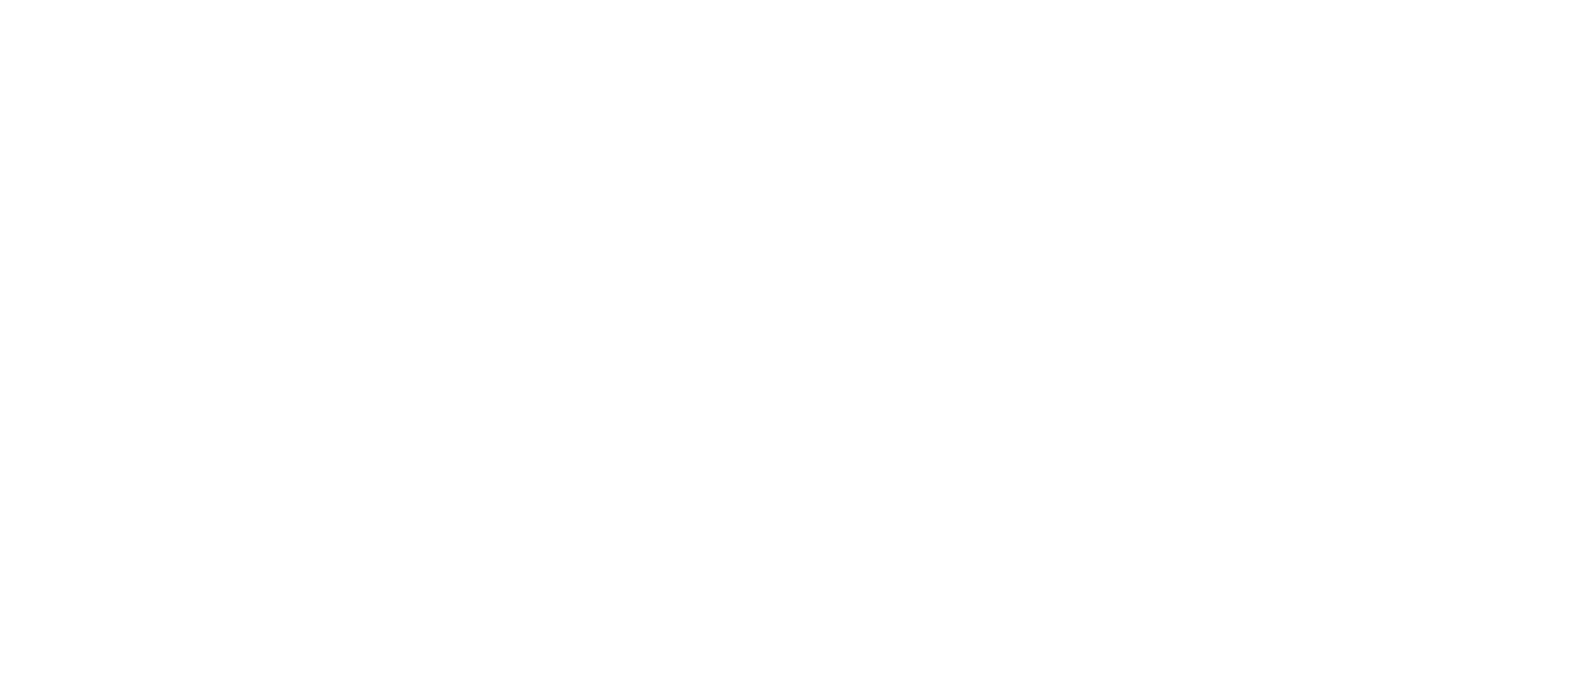 Pennon Group Logo groß für dunkle Hintergründe (transparentes PNG)